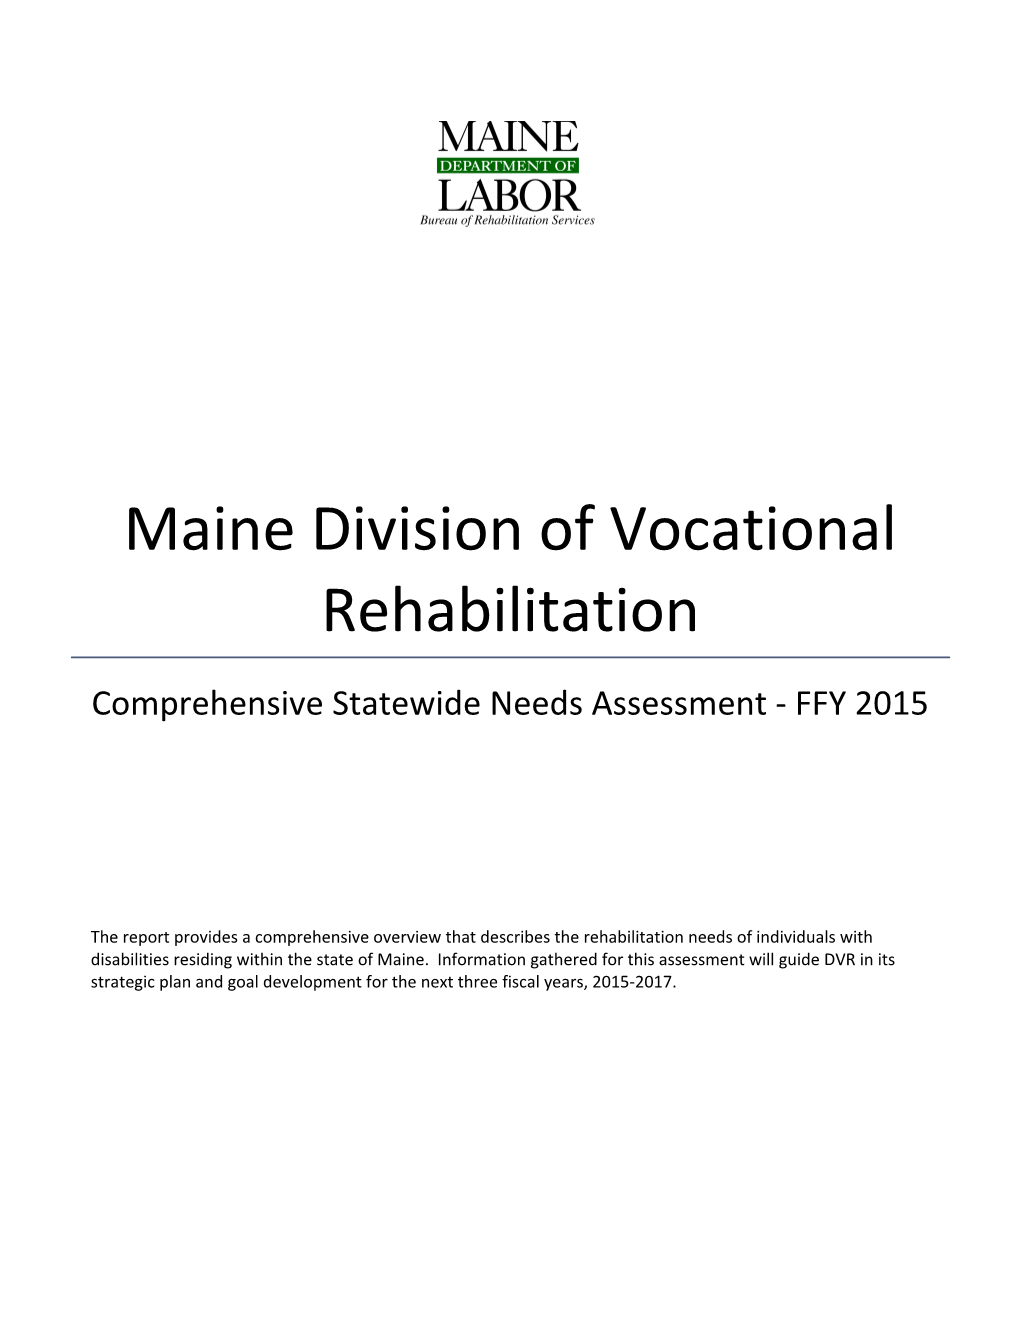 Maine Division of Vocational Rehabilitation